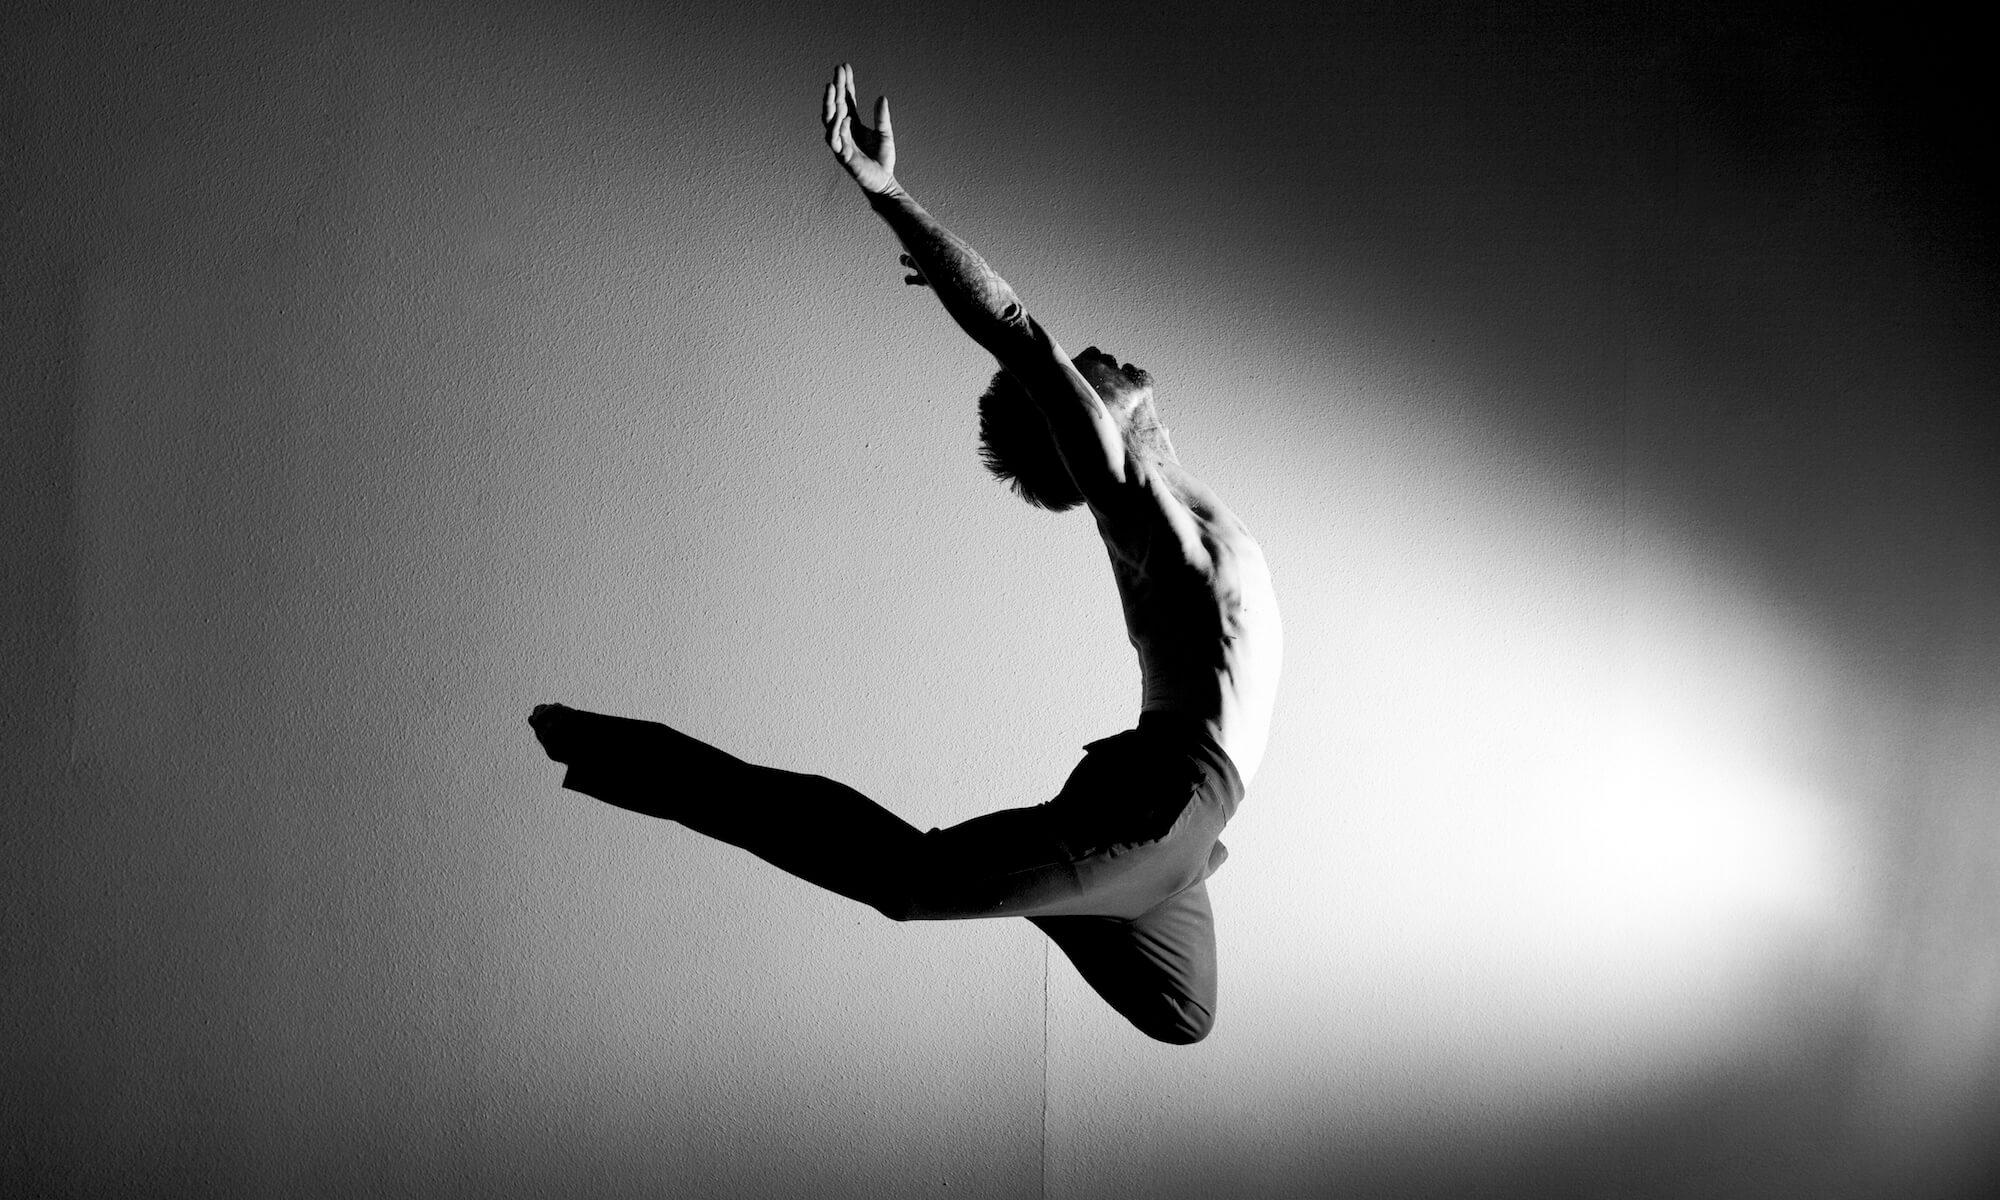 Dancer in mid-air